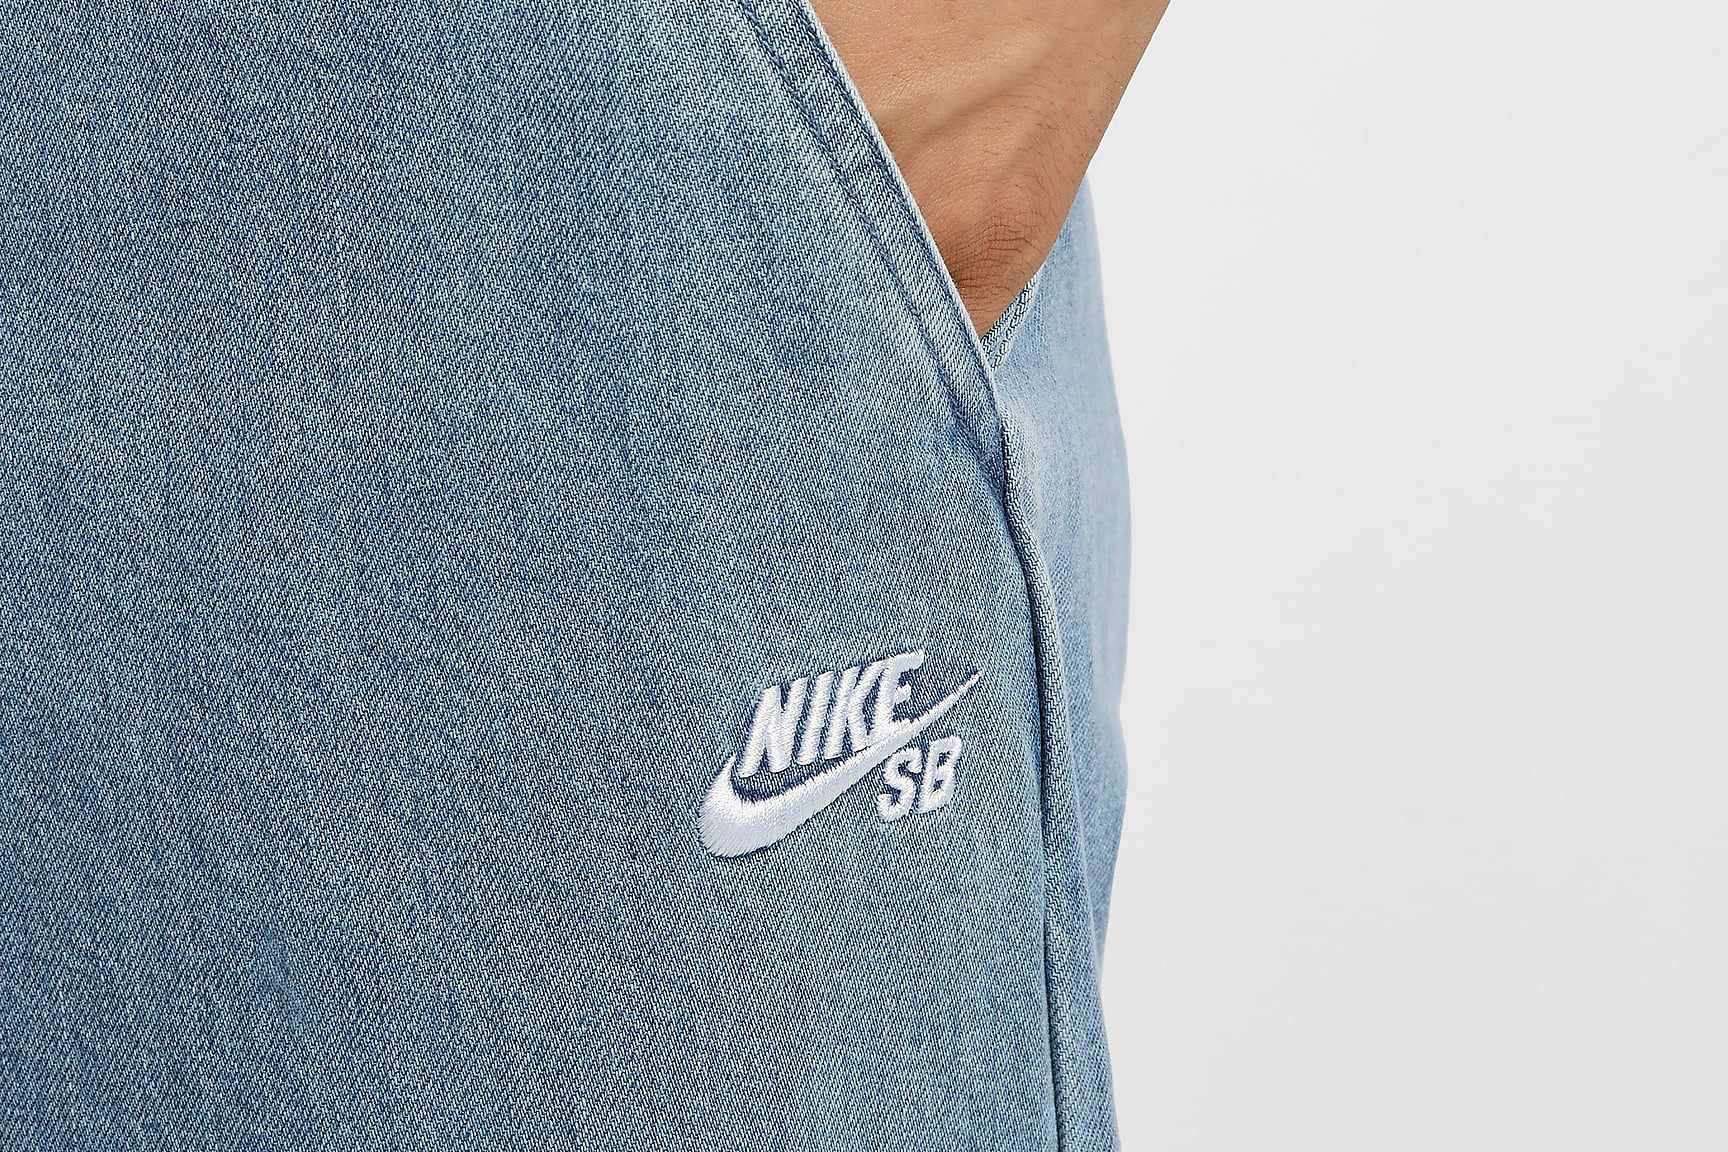 Nike SB's El Jeano denim pants made of a light blue cordura weave